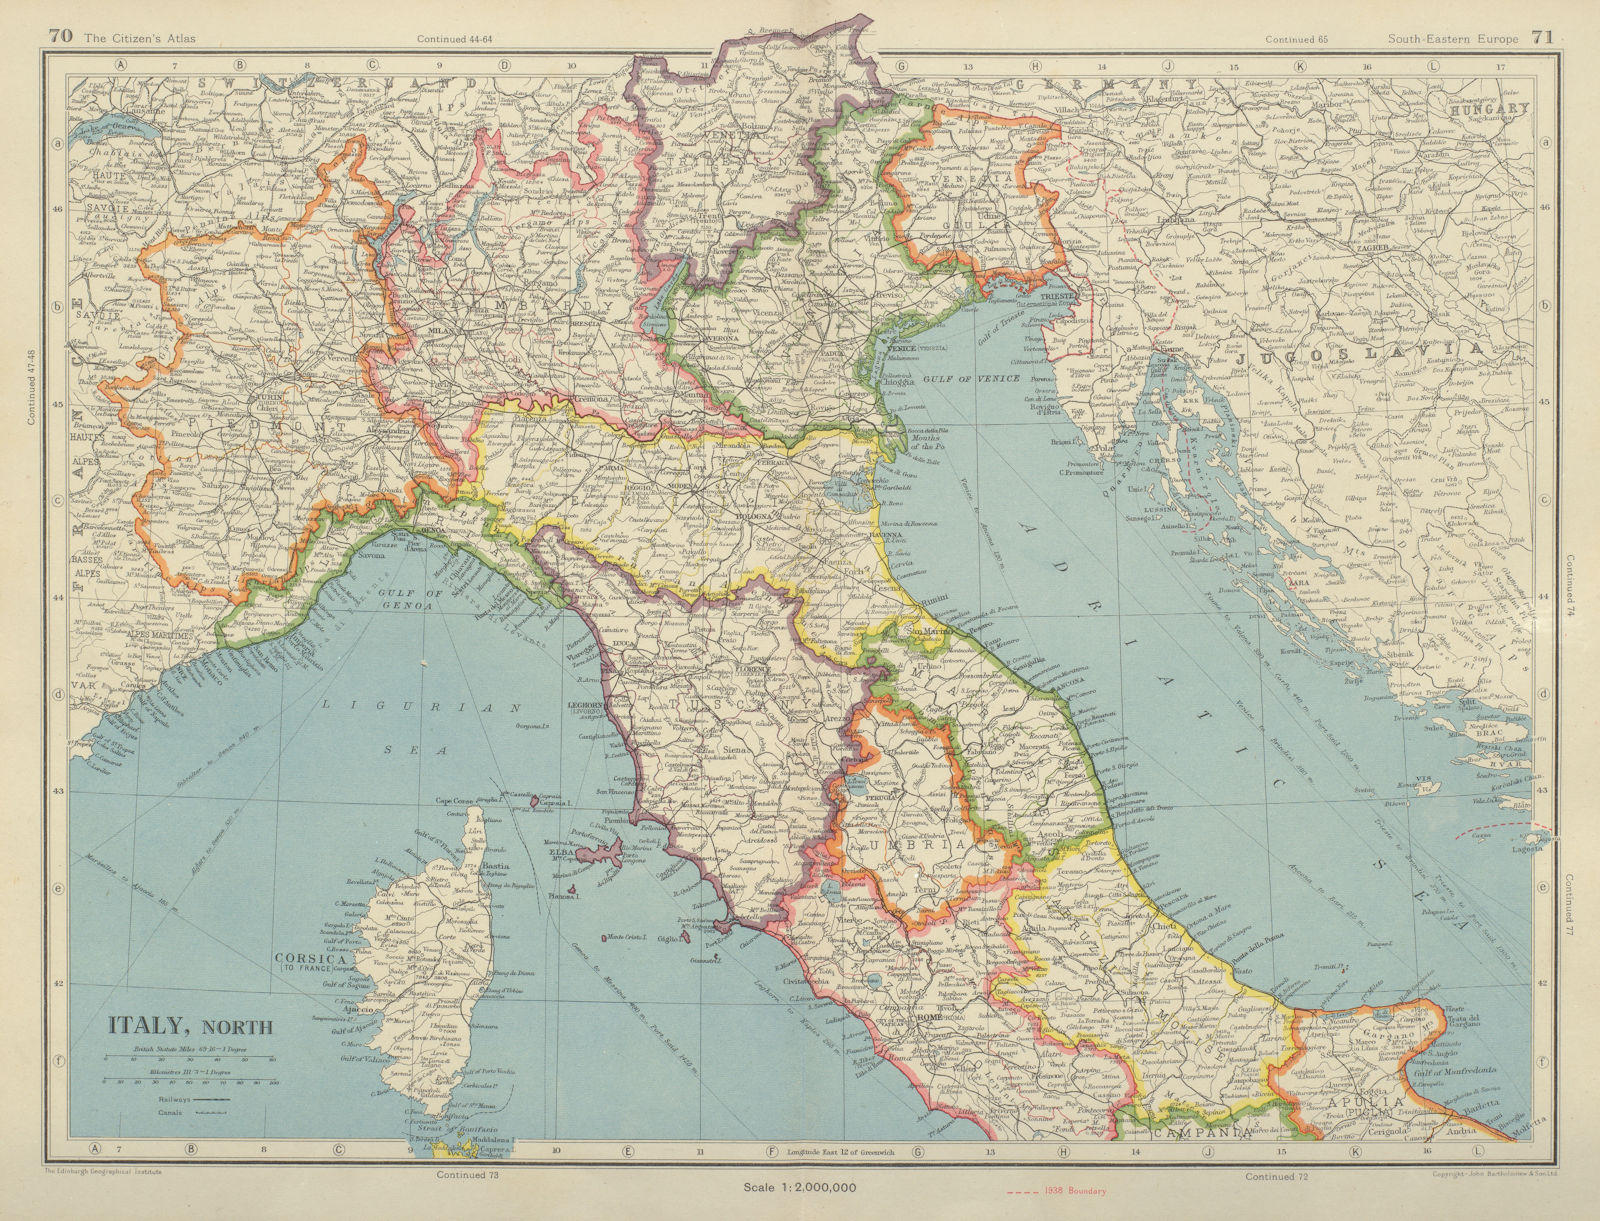 N ITALY Post WW2 / pre 1947 border changes. Trieste international zone 1947 map